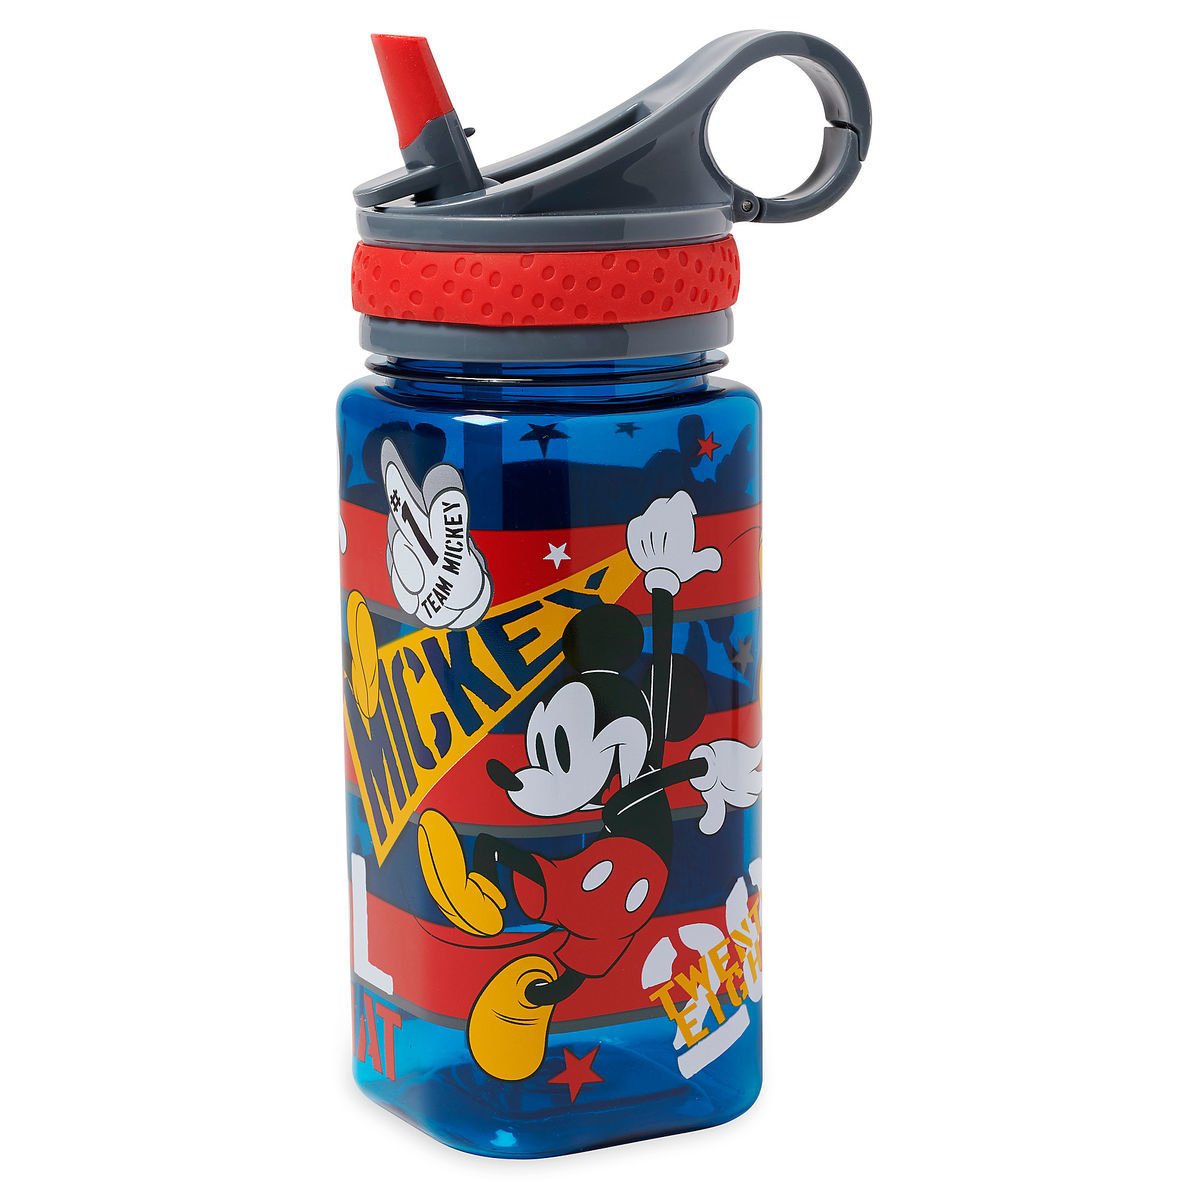 Disney Store Mickey Mouse Plastic Water Bottle Straw 2018 Sold Az 4302020